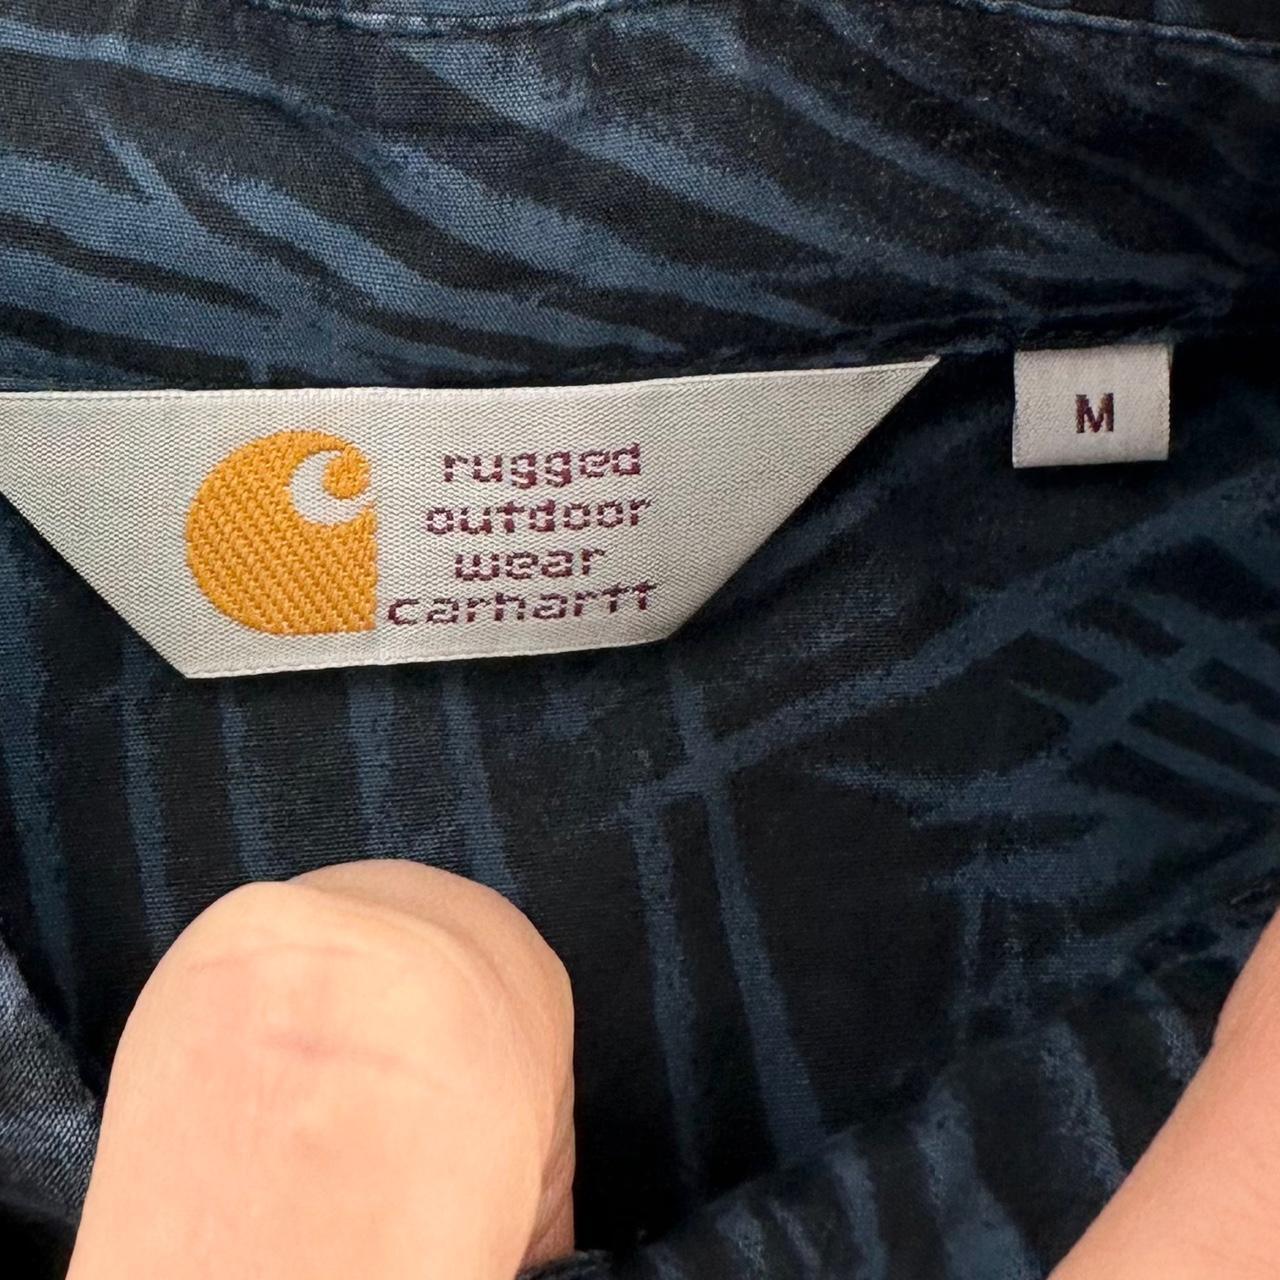 Carhartt Pattern Button Shirt Size M - Known Source